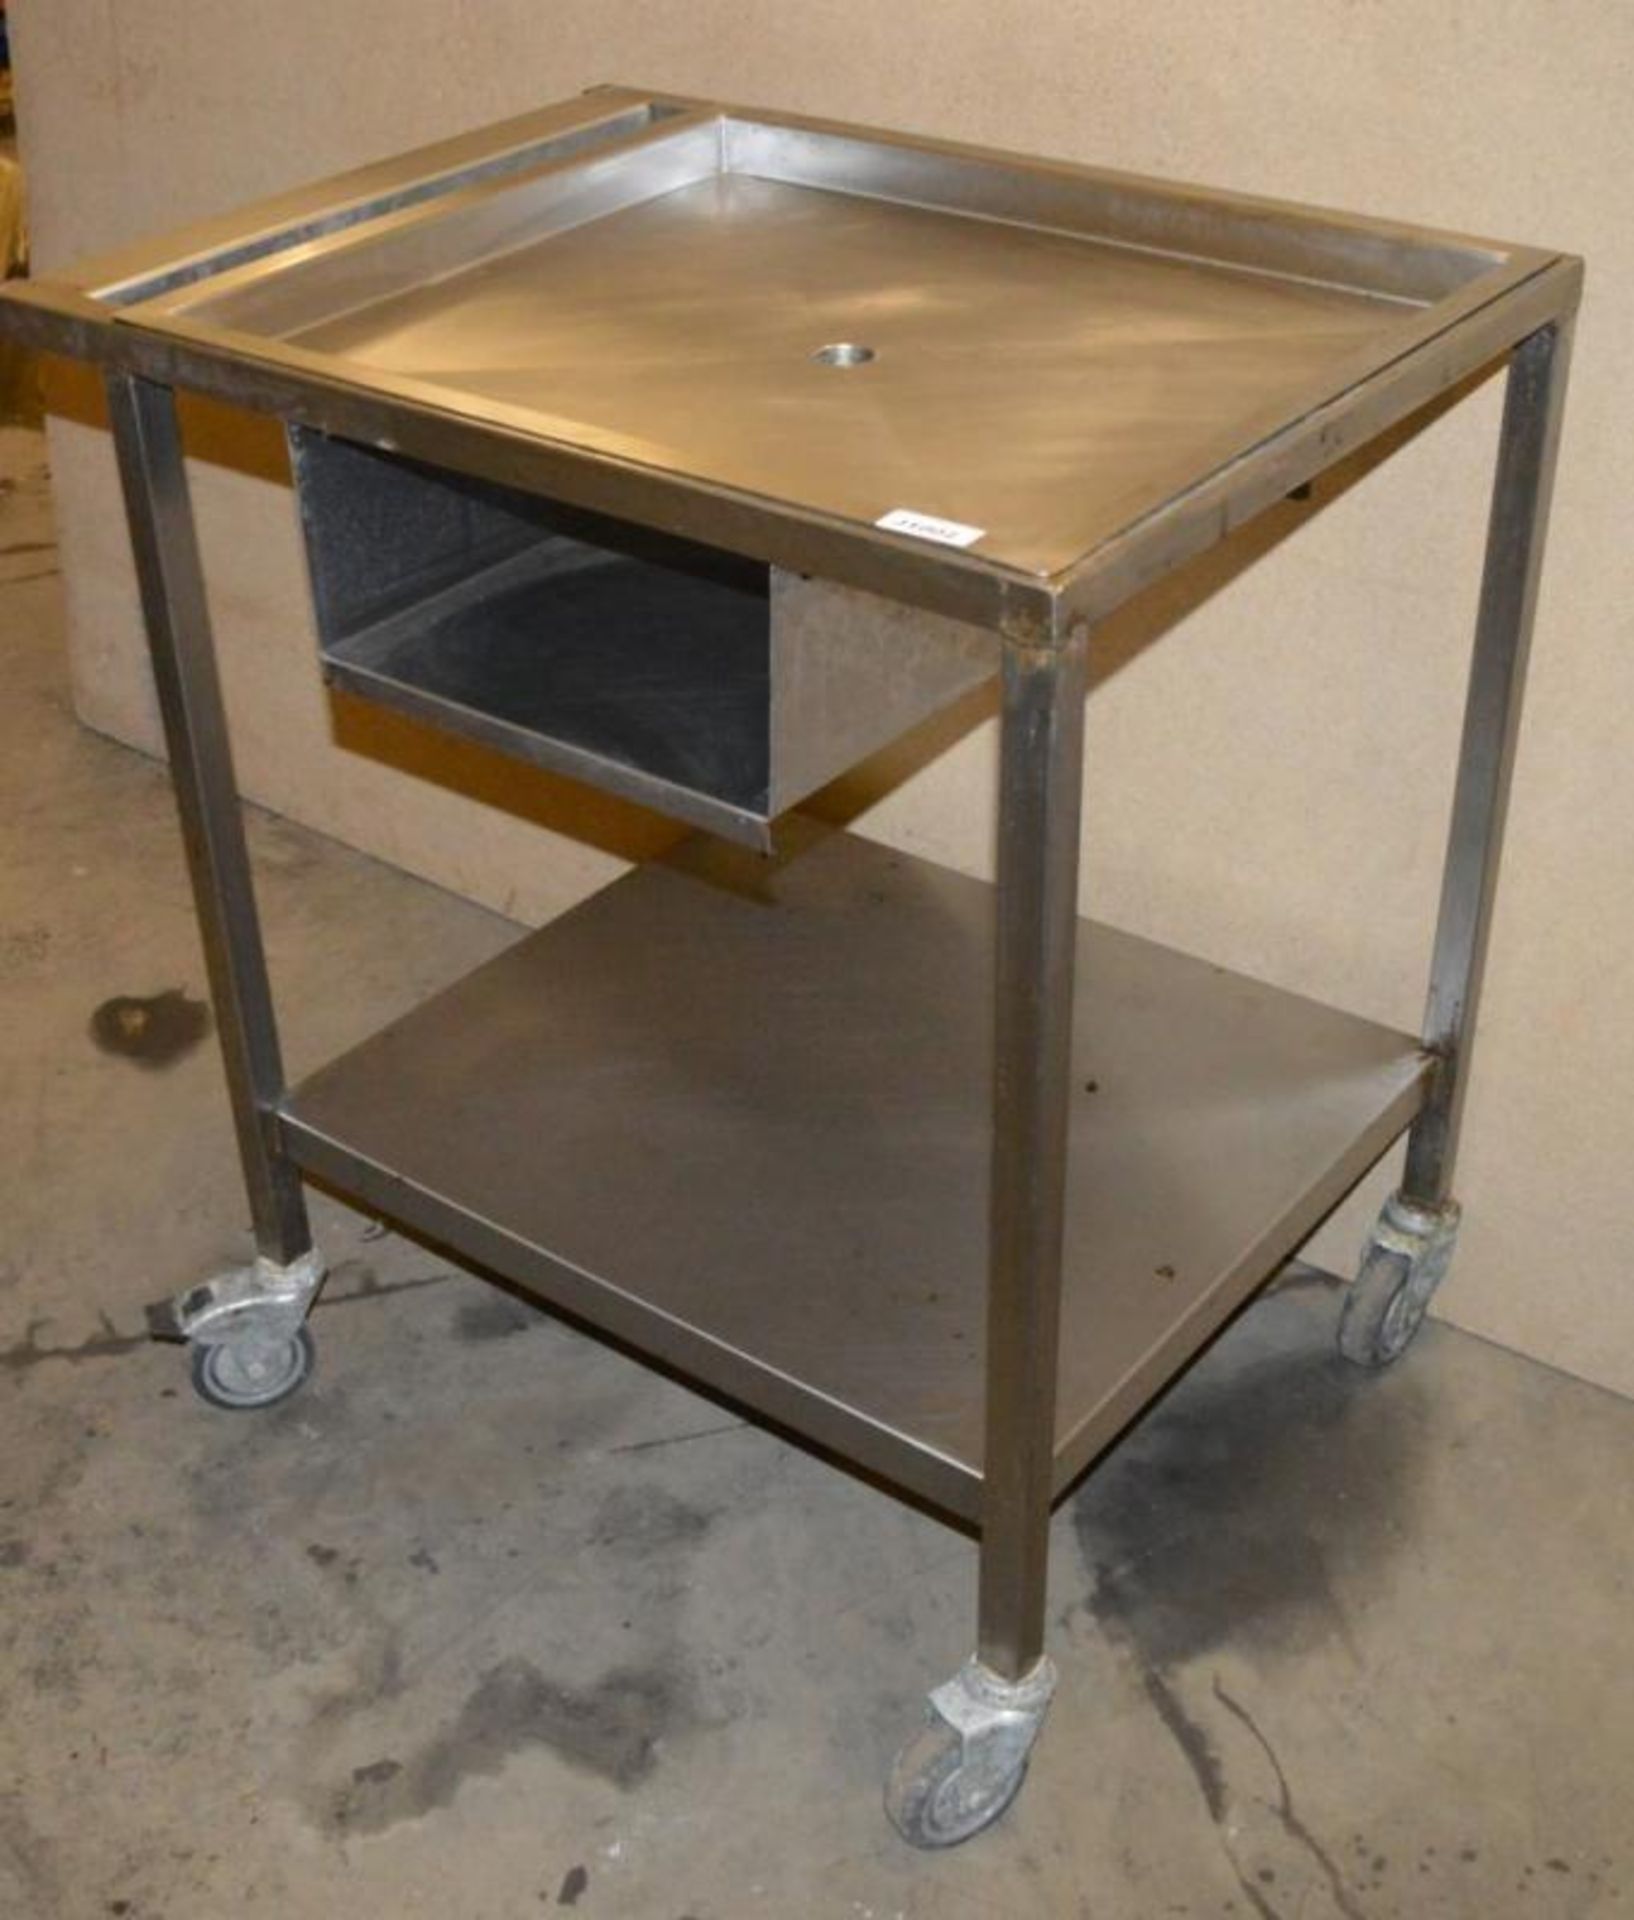 1 x Wheeled Stainless Steel Prep Bench with Drain Hole - Dimensions: 81.5 x 60.5 x 88cm - Ref: J1002 - Bild 4 aus 4